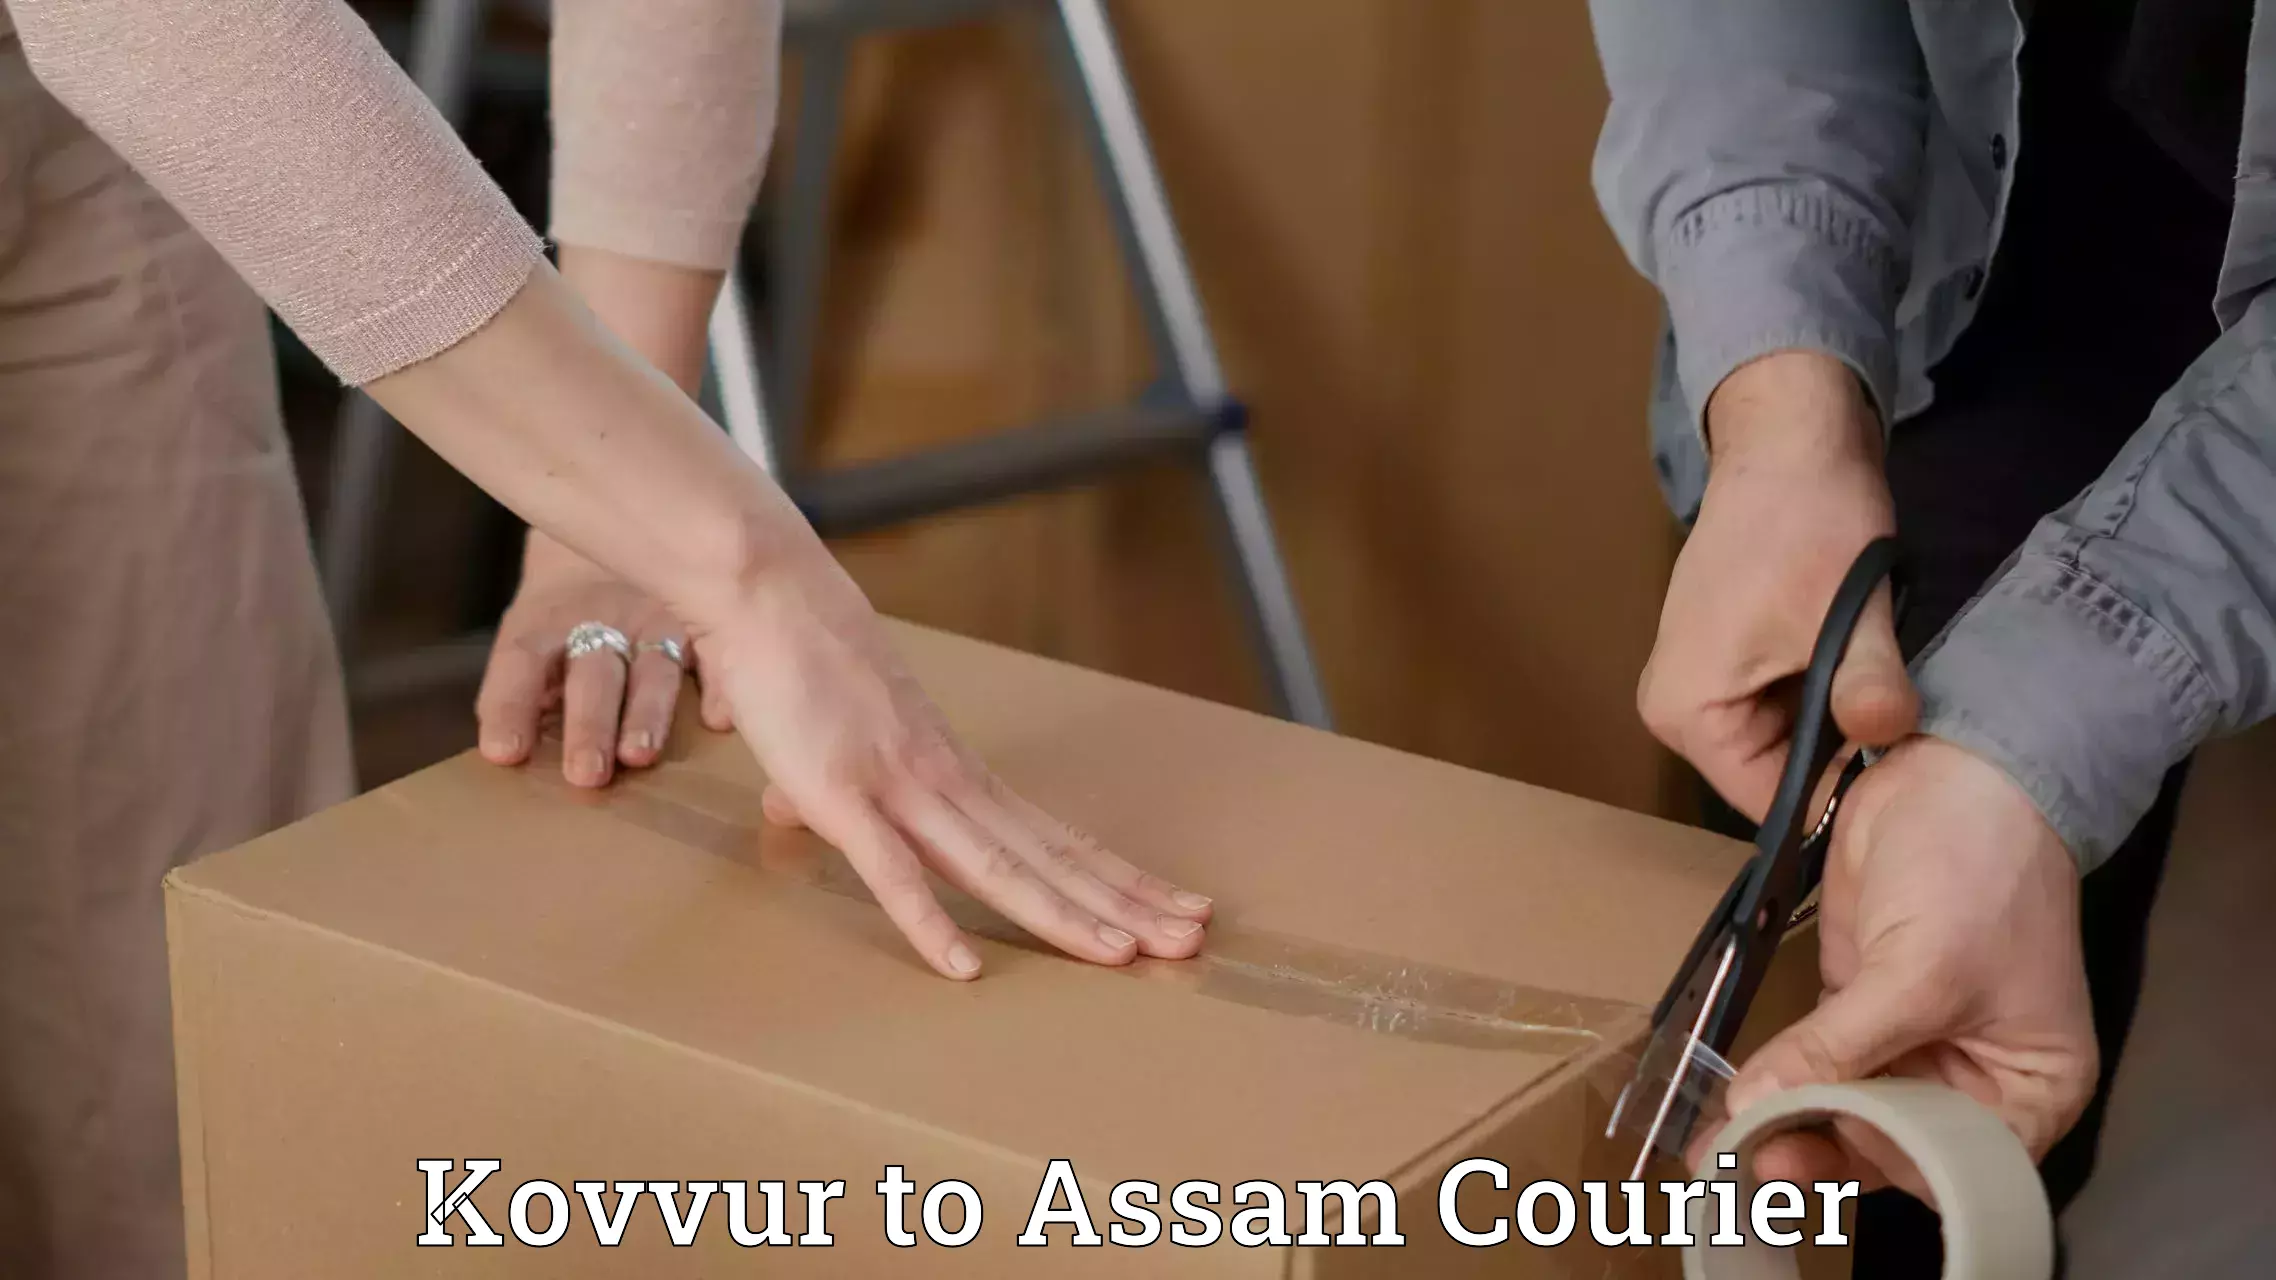 Reliable courier service Kovvur to Assam